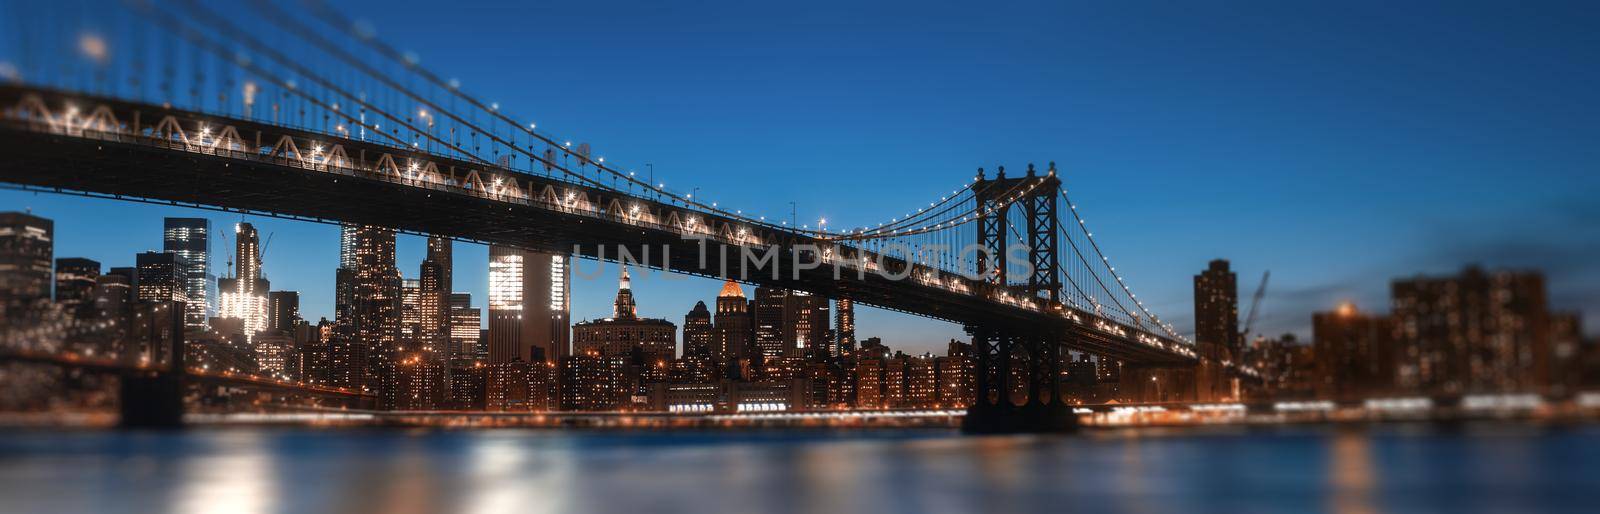 Manhattan Skyline and Manhattan Bridge At Night by palinchak